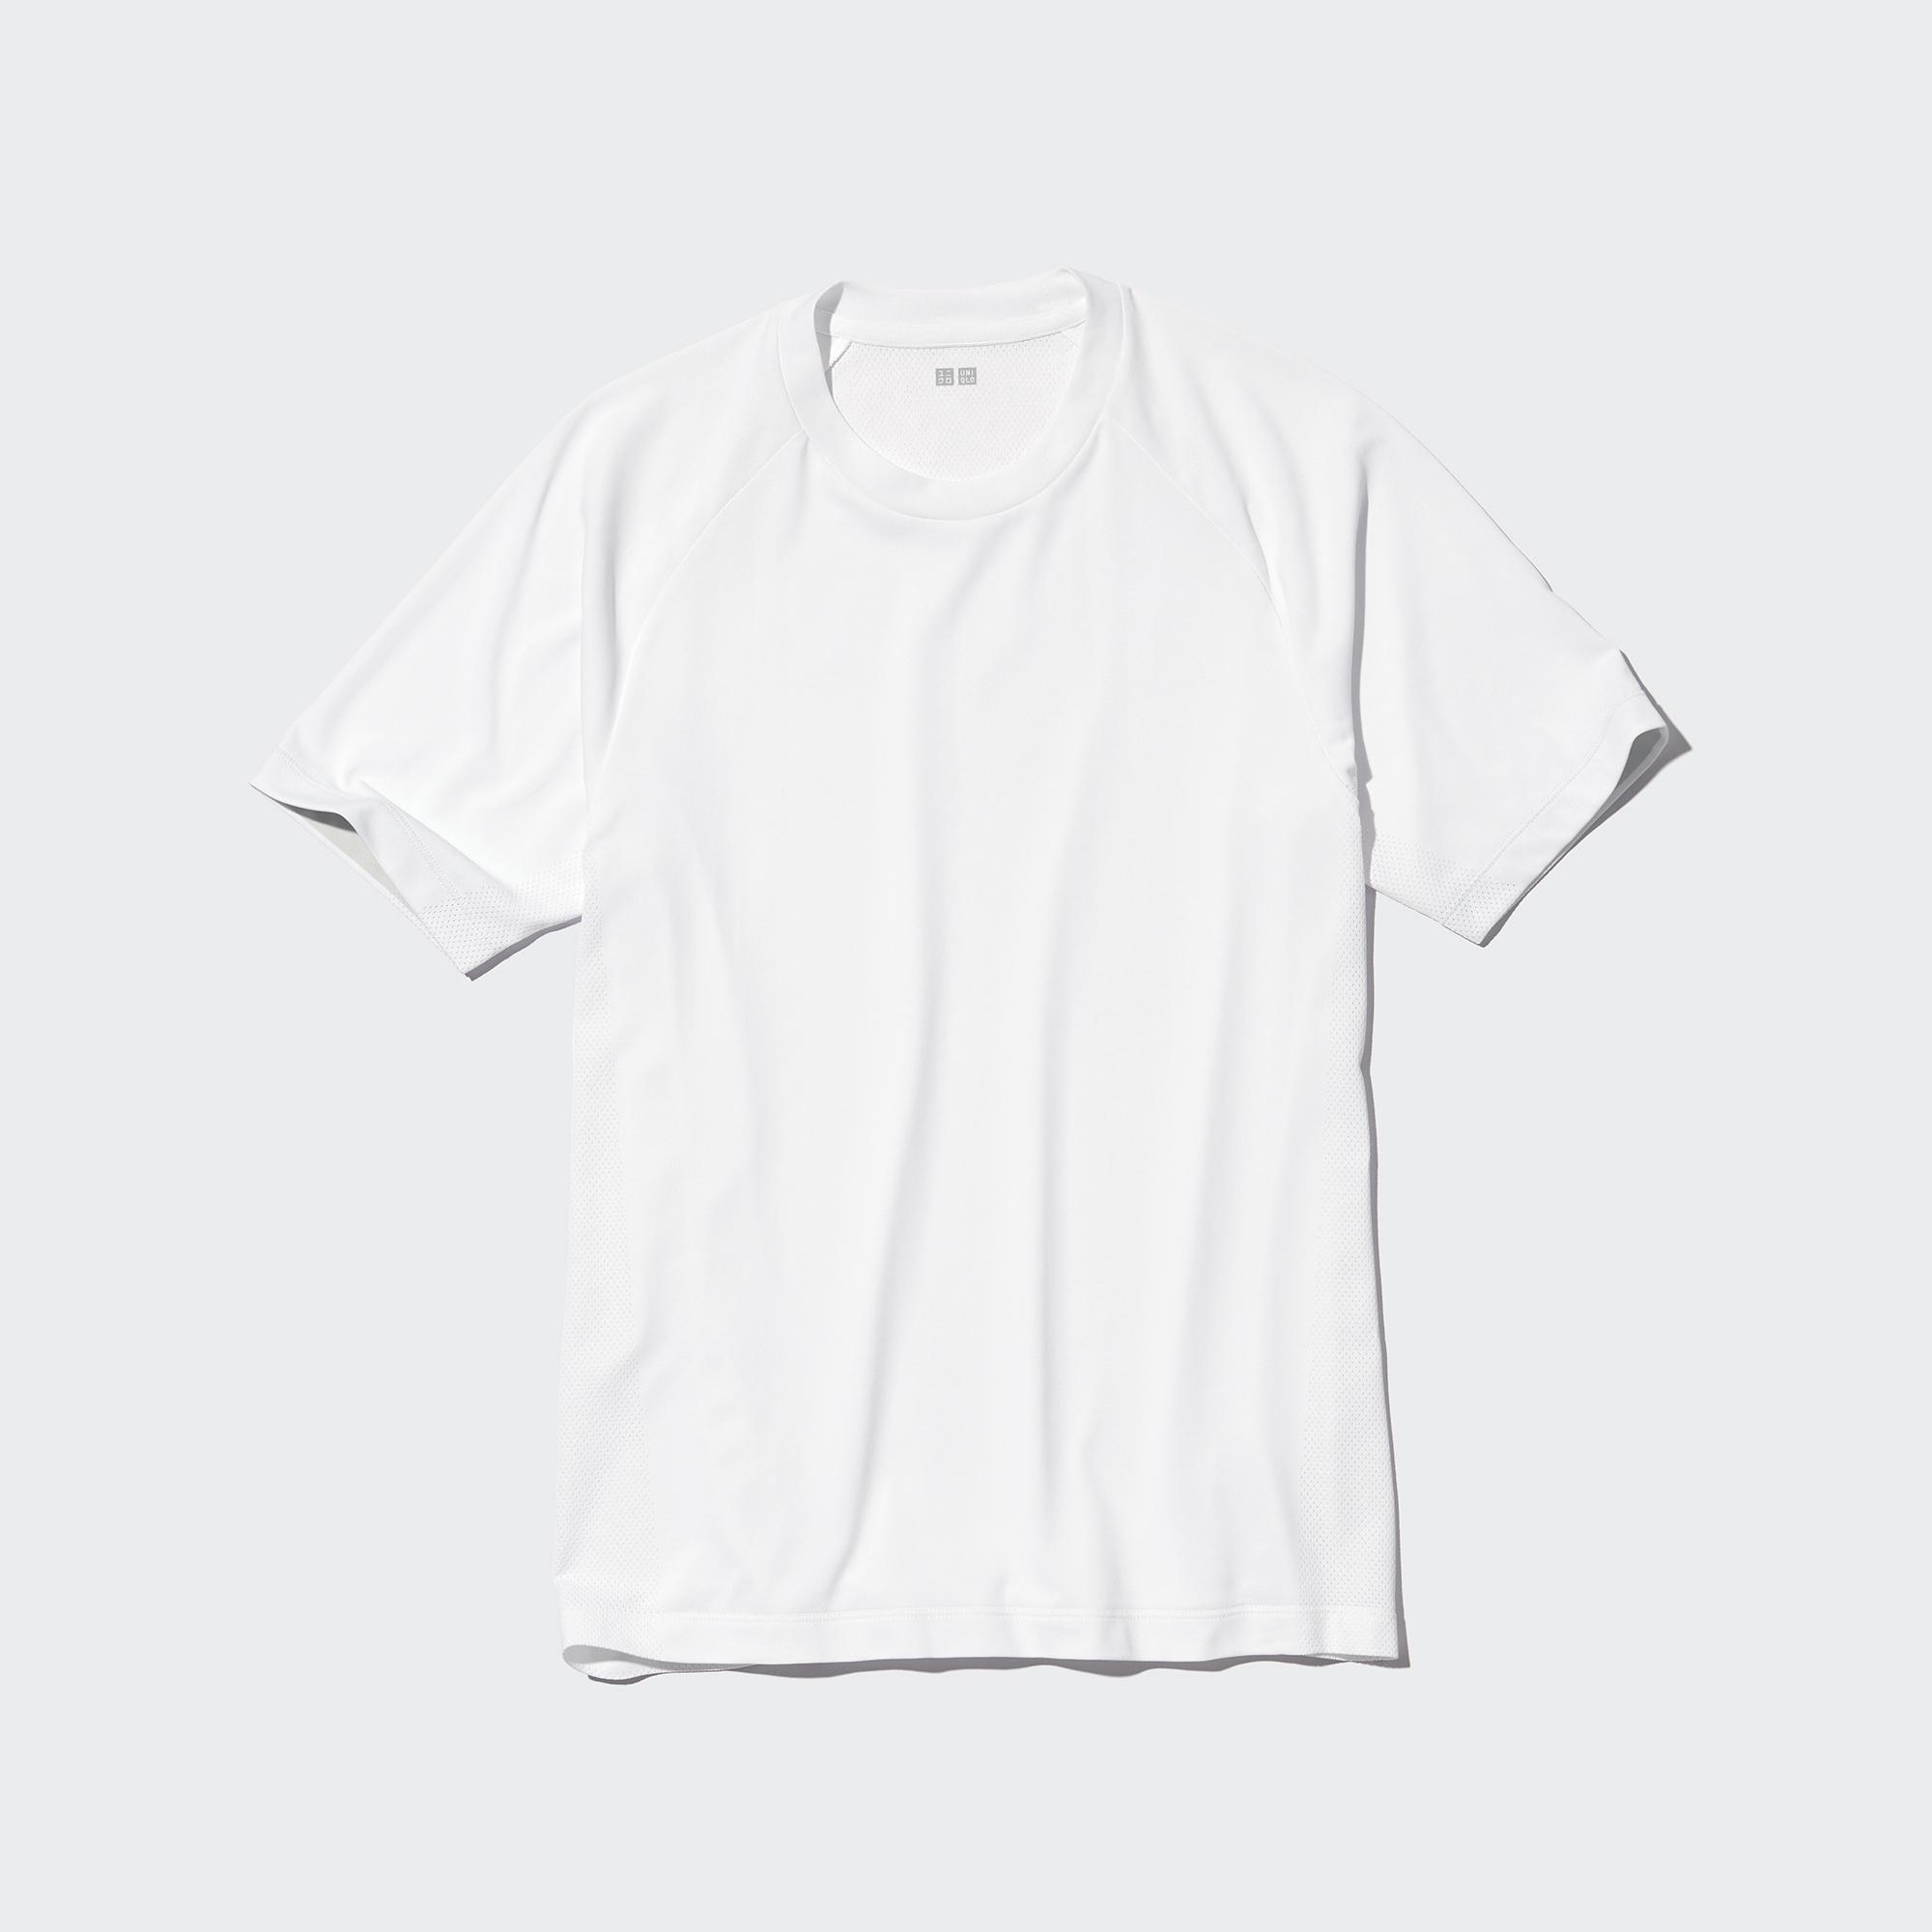 UNIQLO Men's Dry-EX Contrast Stitch Fitness Athletic Crewneck T-Shirt M BLK  NWT!